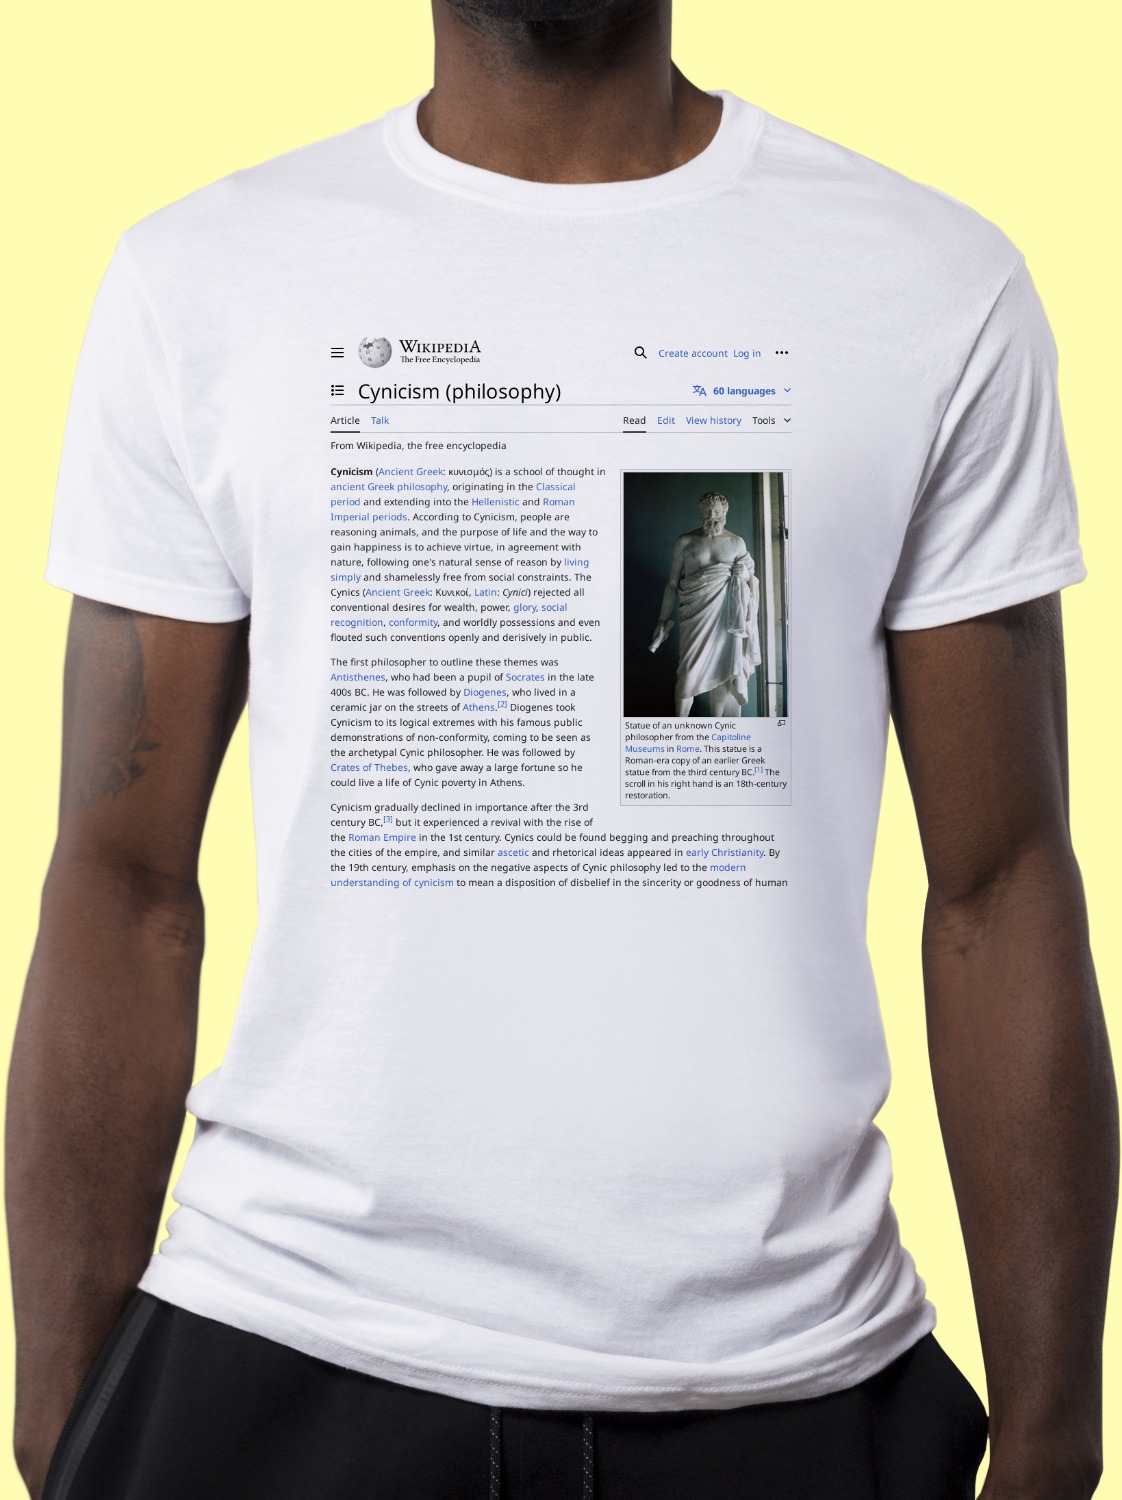 Cynicism_(philosophy) Wikipedia Shirt